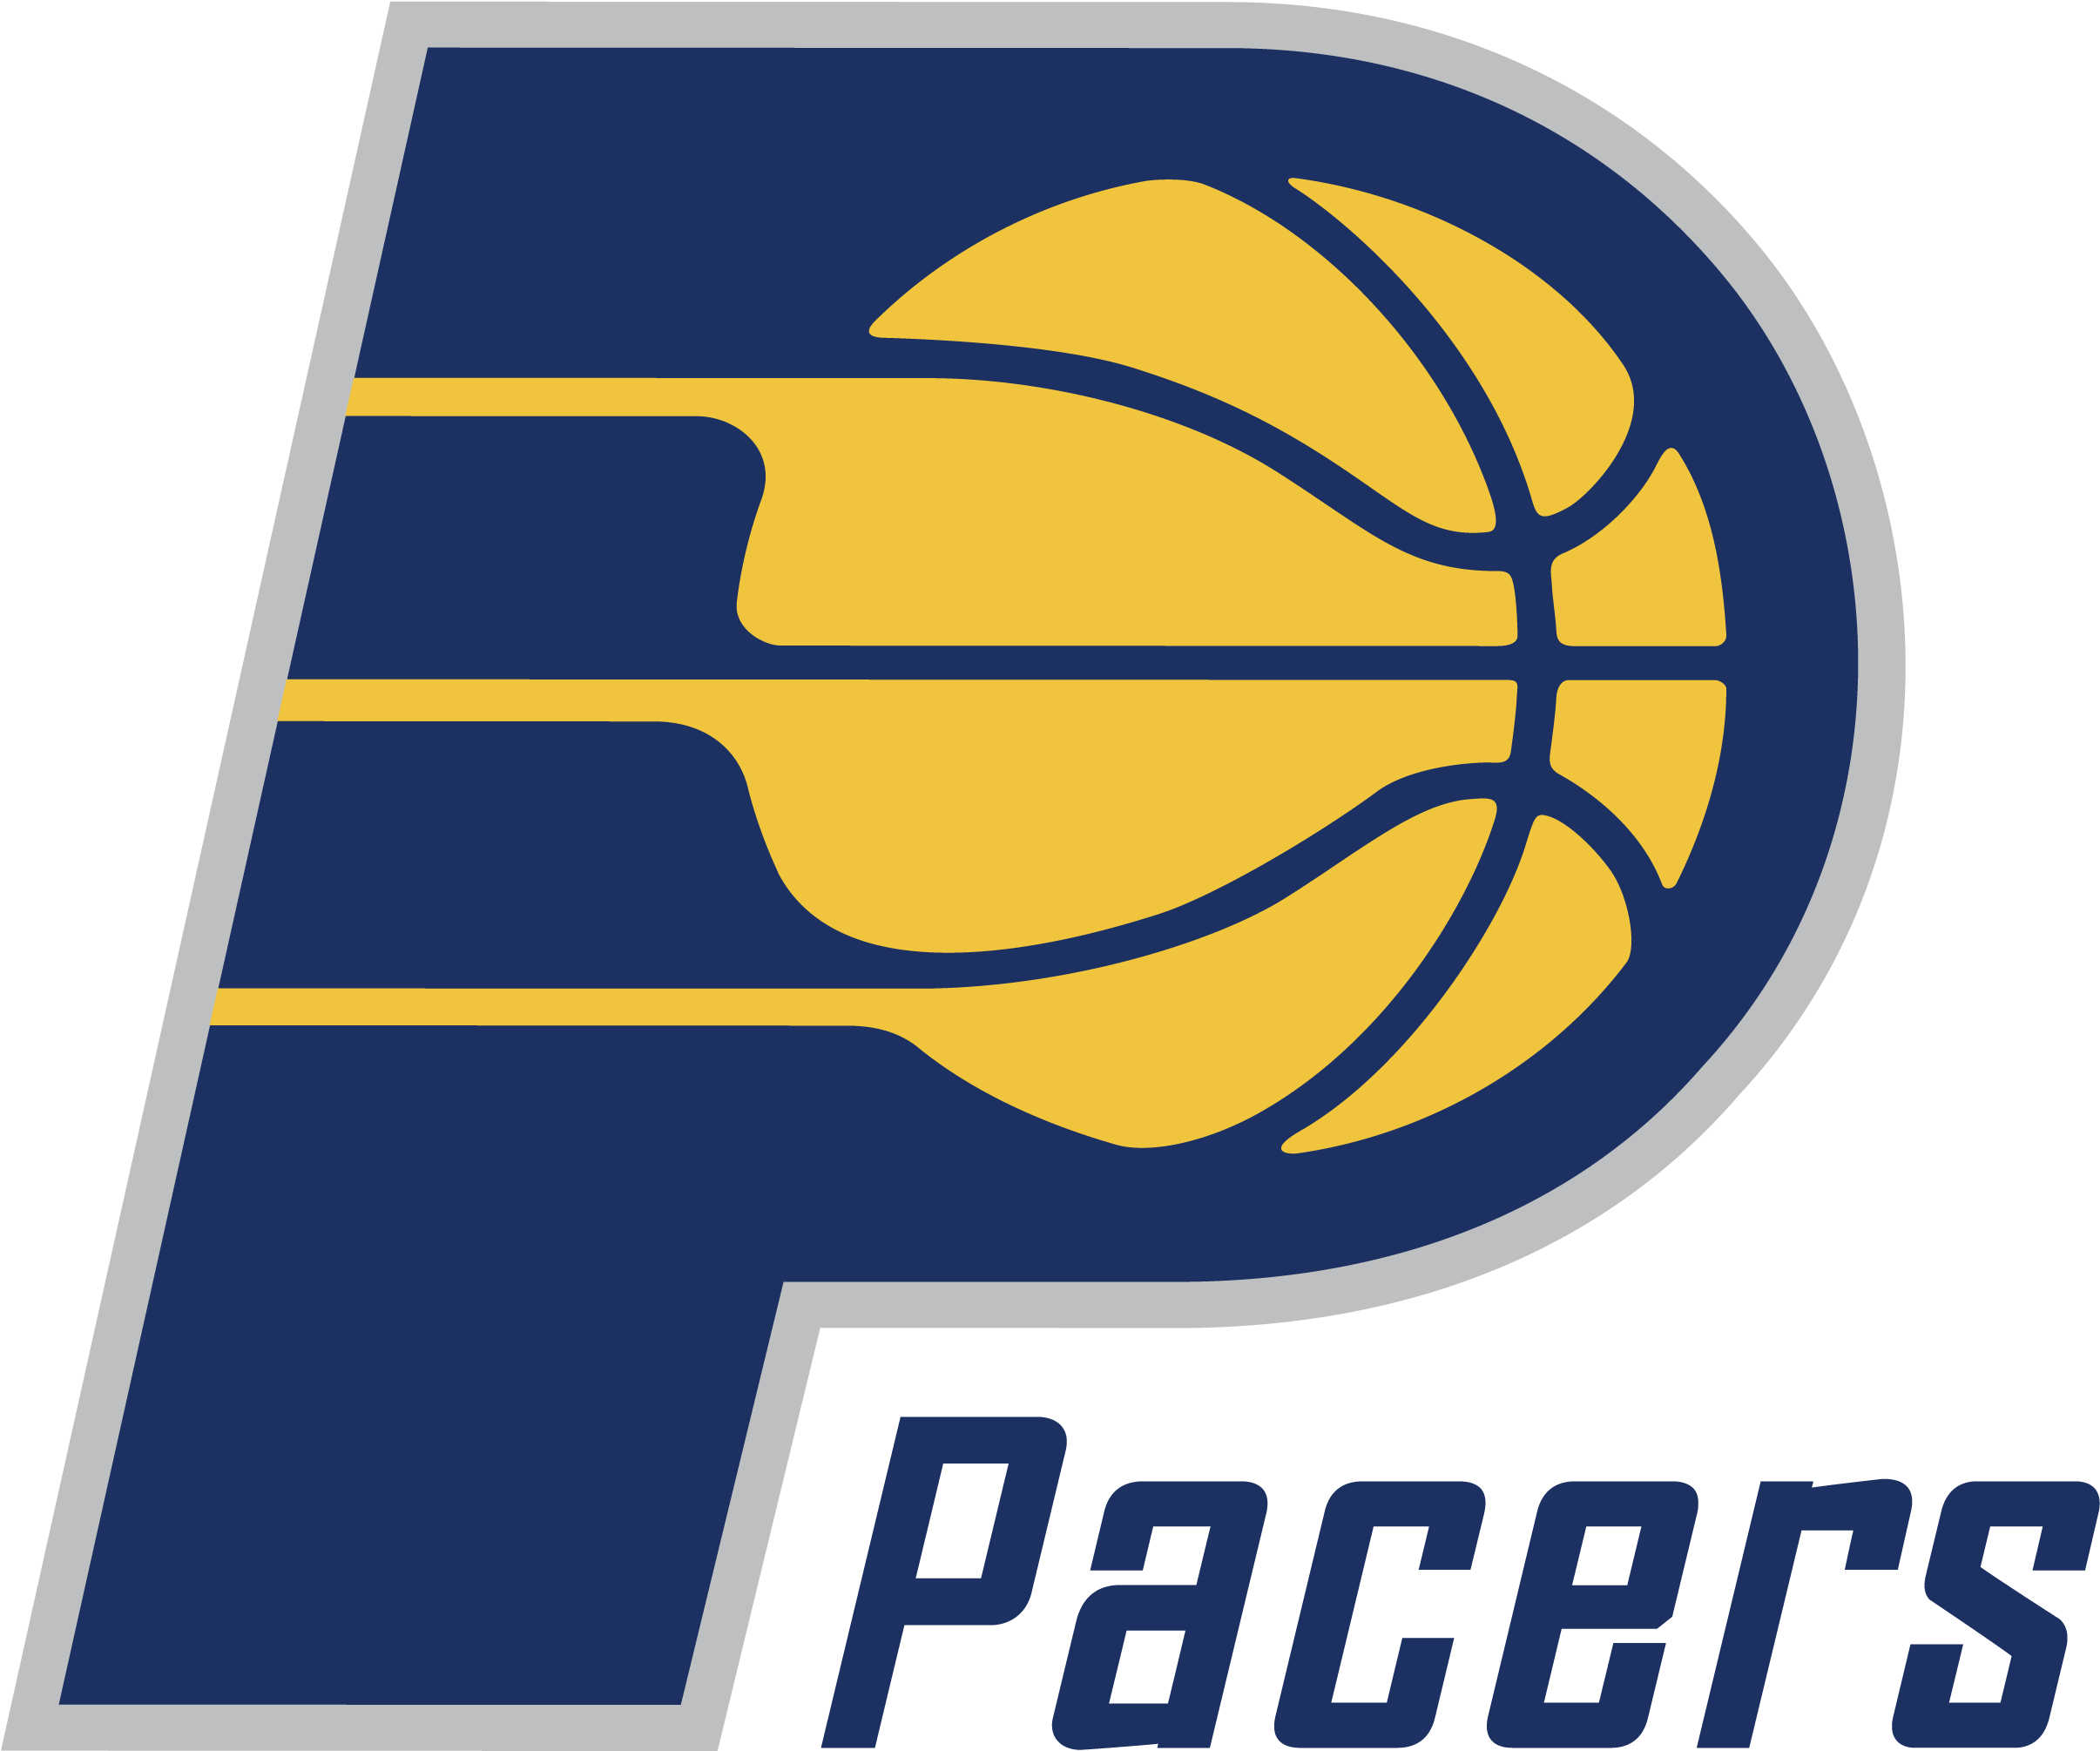 Indiana Basketball Team Logo PNG image